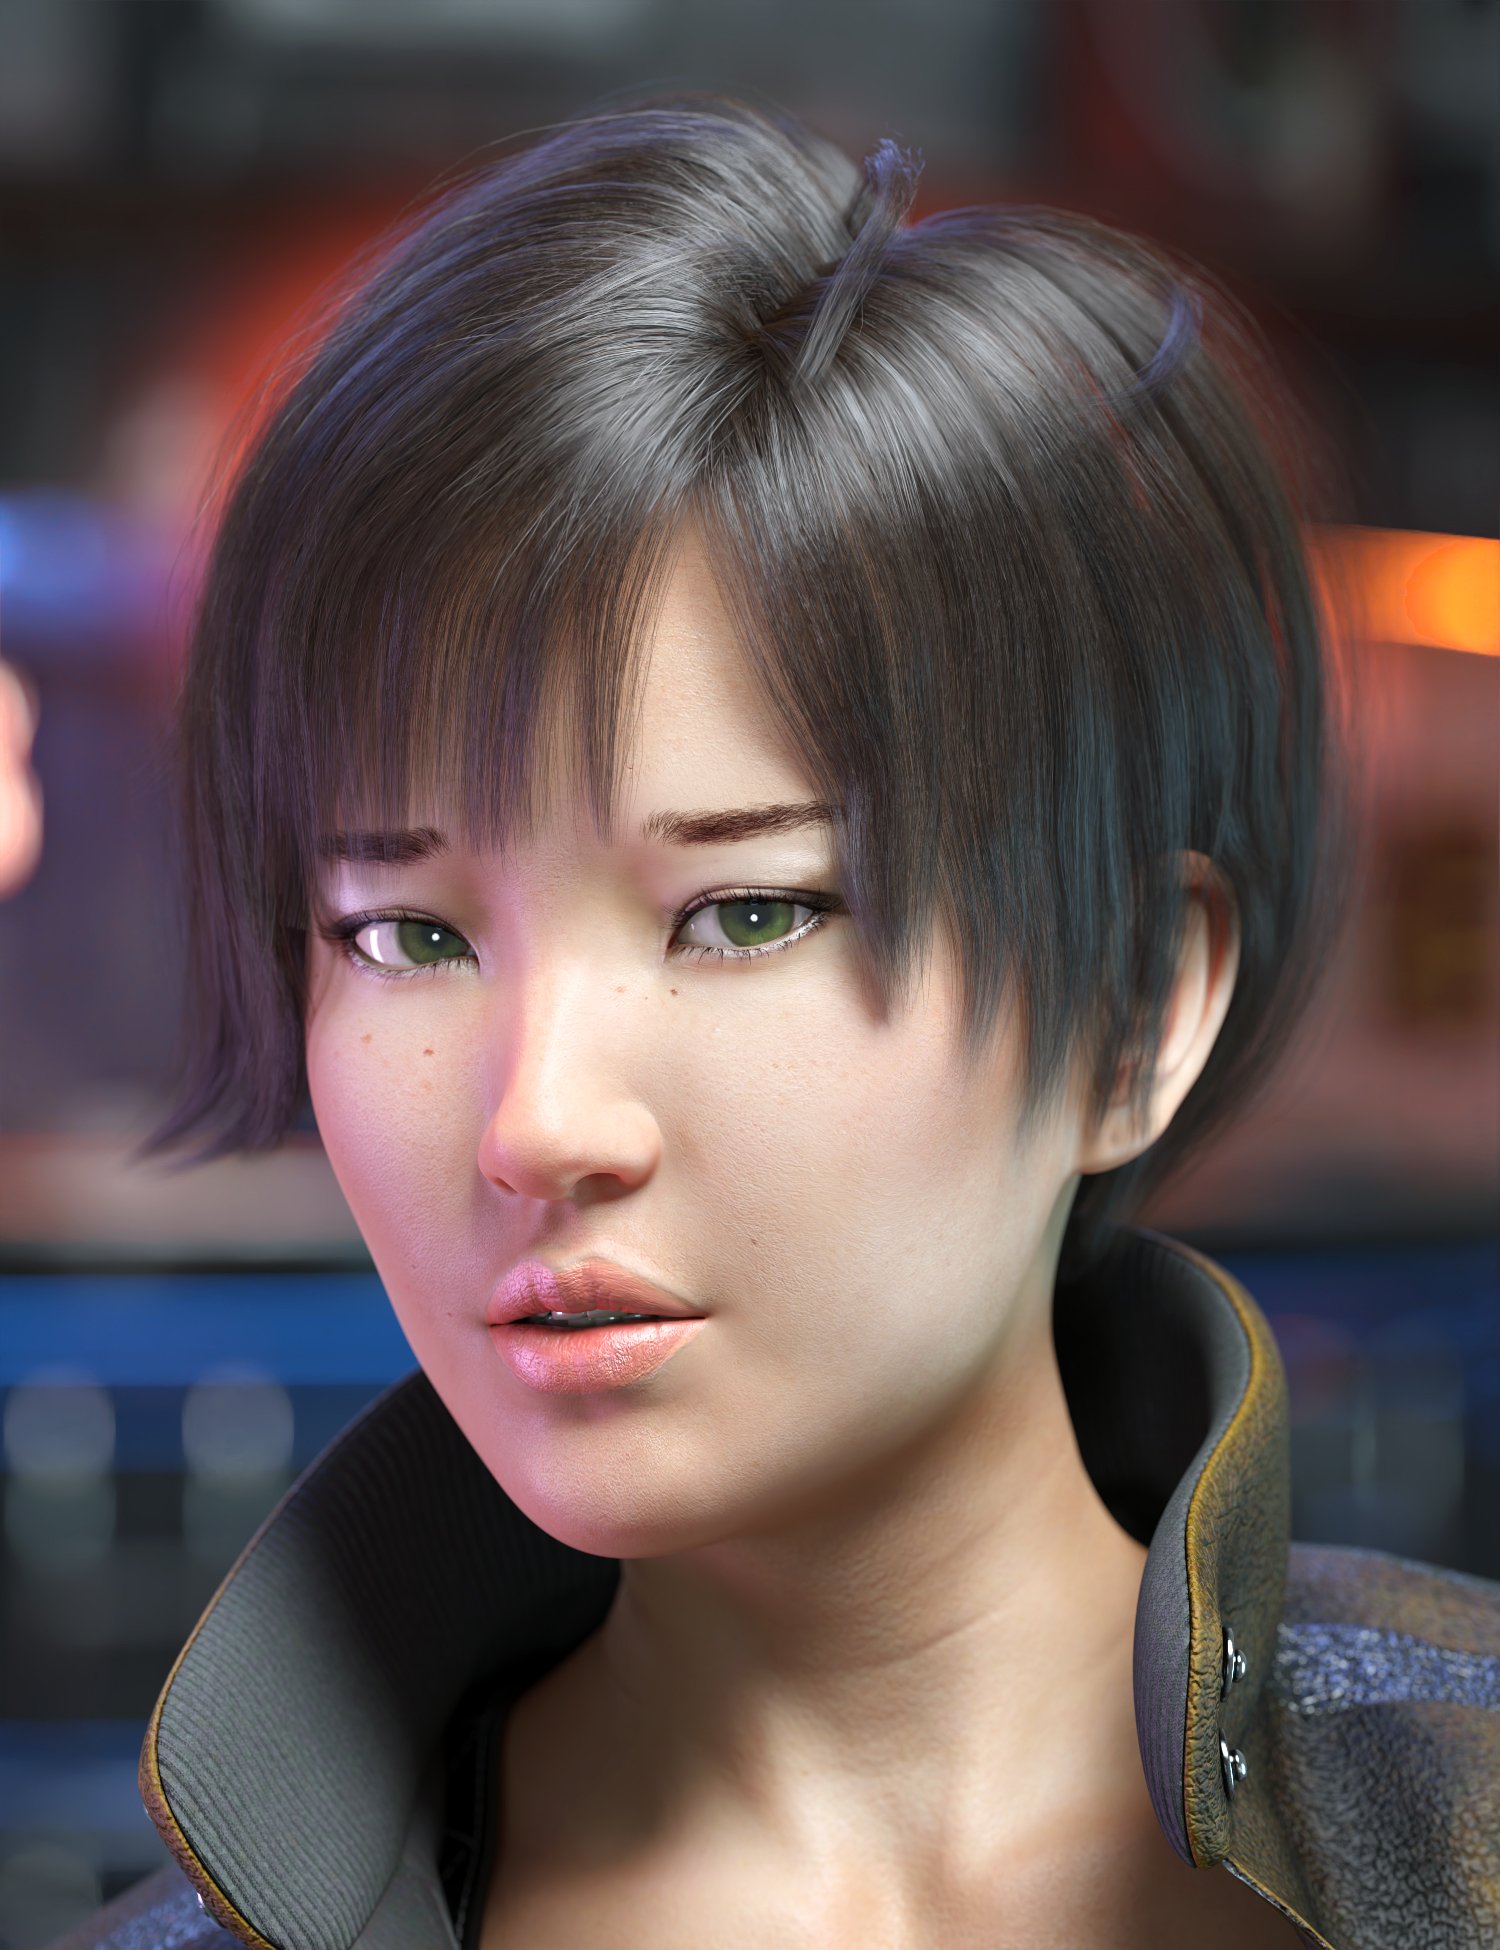 Hong Hair for Genesis 8.1 Female by: Ergou, 3D Models by Daz 3D